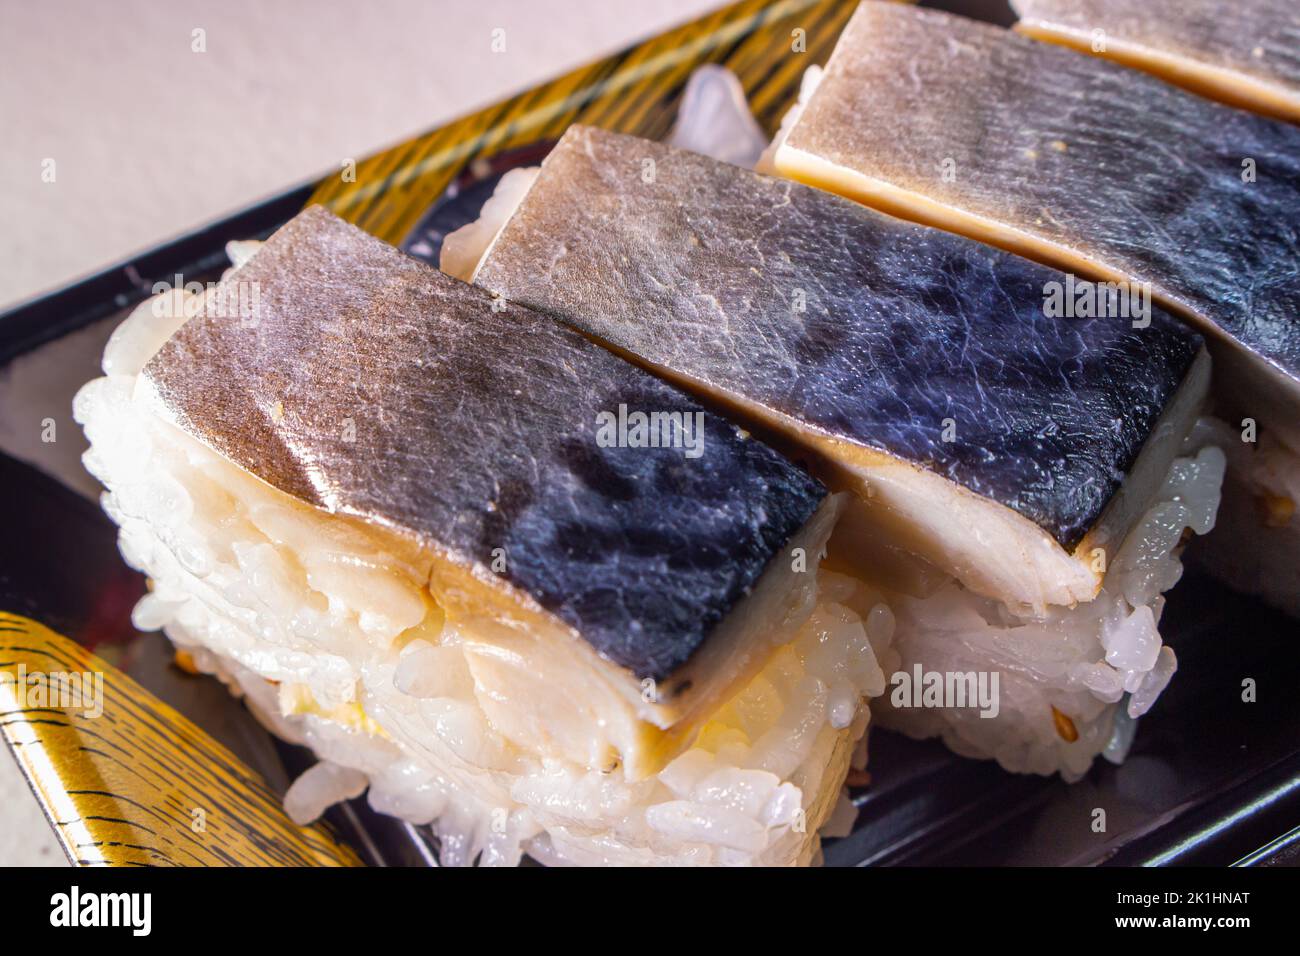 https://c8.alamy.com/comp/2K1HNAT/saba-sushi-saba-oshizushi-mackerel-pressed-sushi-oshi-zushi-is-a-form-of-sushi-which-made-by-compressing-sushi-rice-with-fish-and-toppings-2K1HNAT.jpg